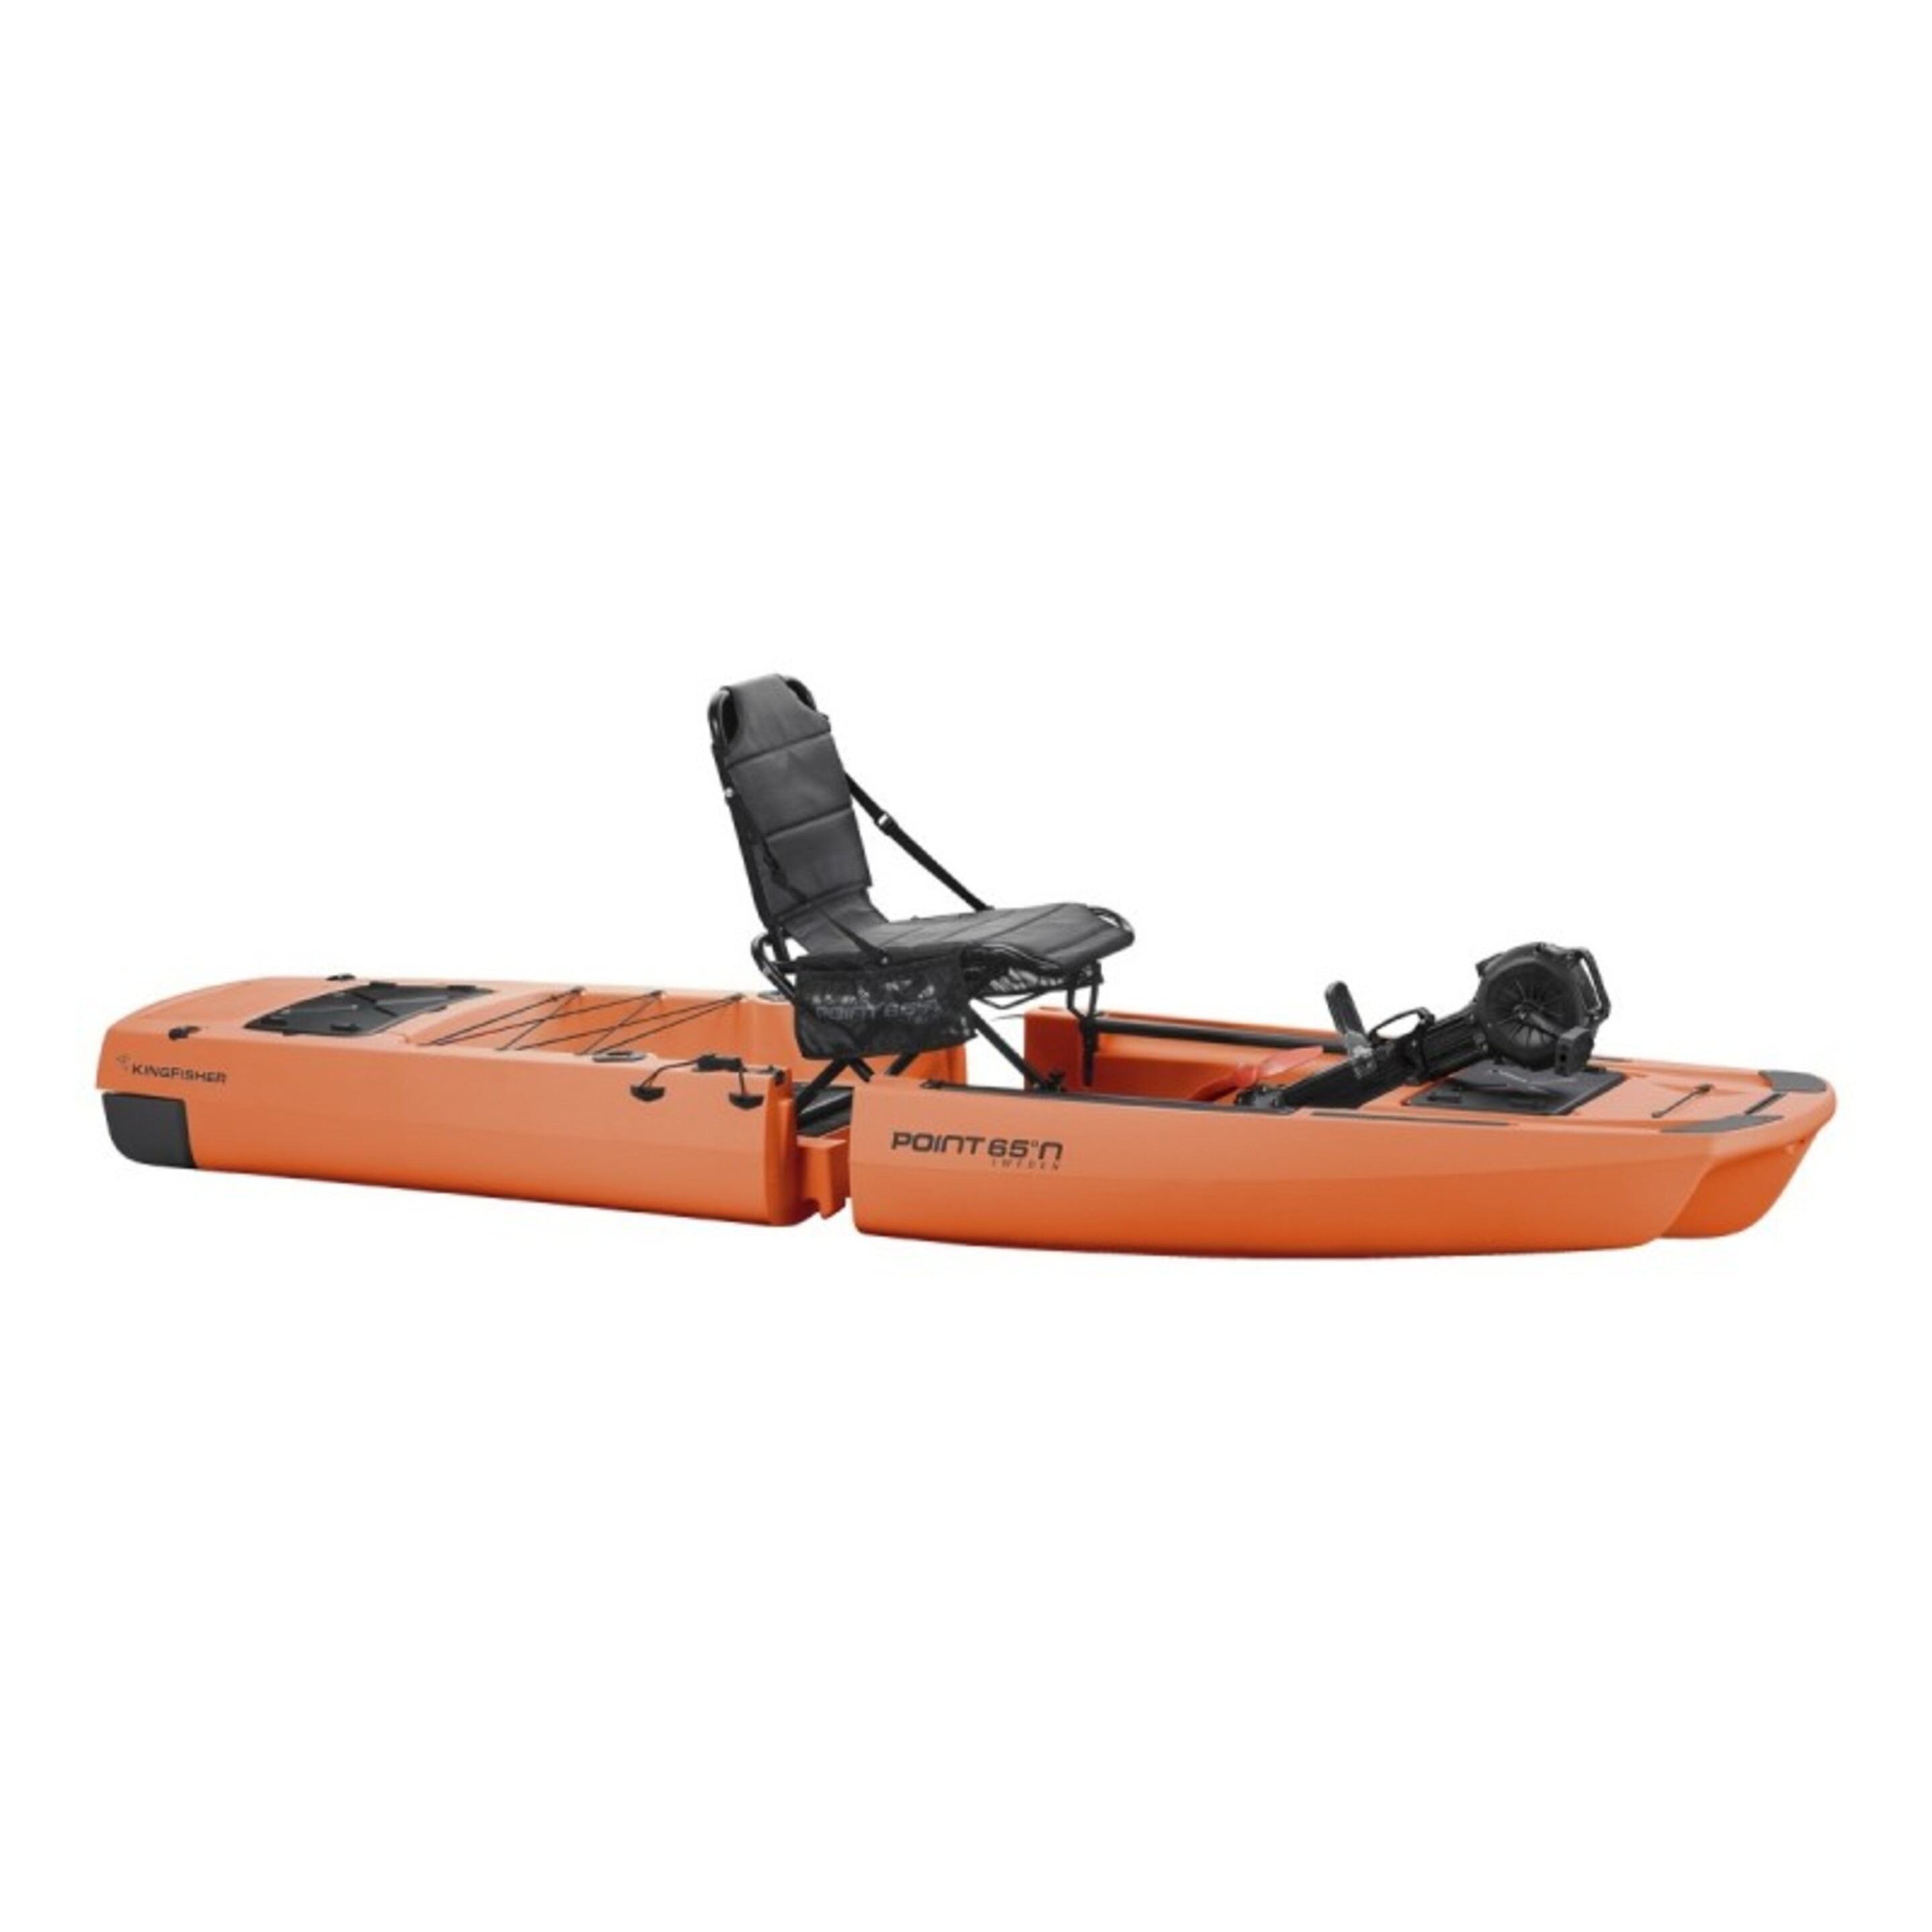 Kayak Modular De Pesca Point 65 Kingfisher Con Pedales